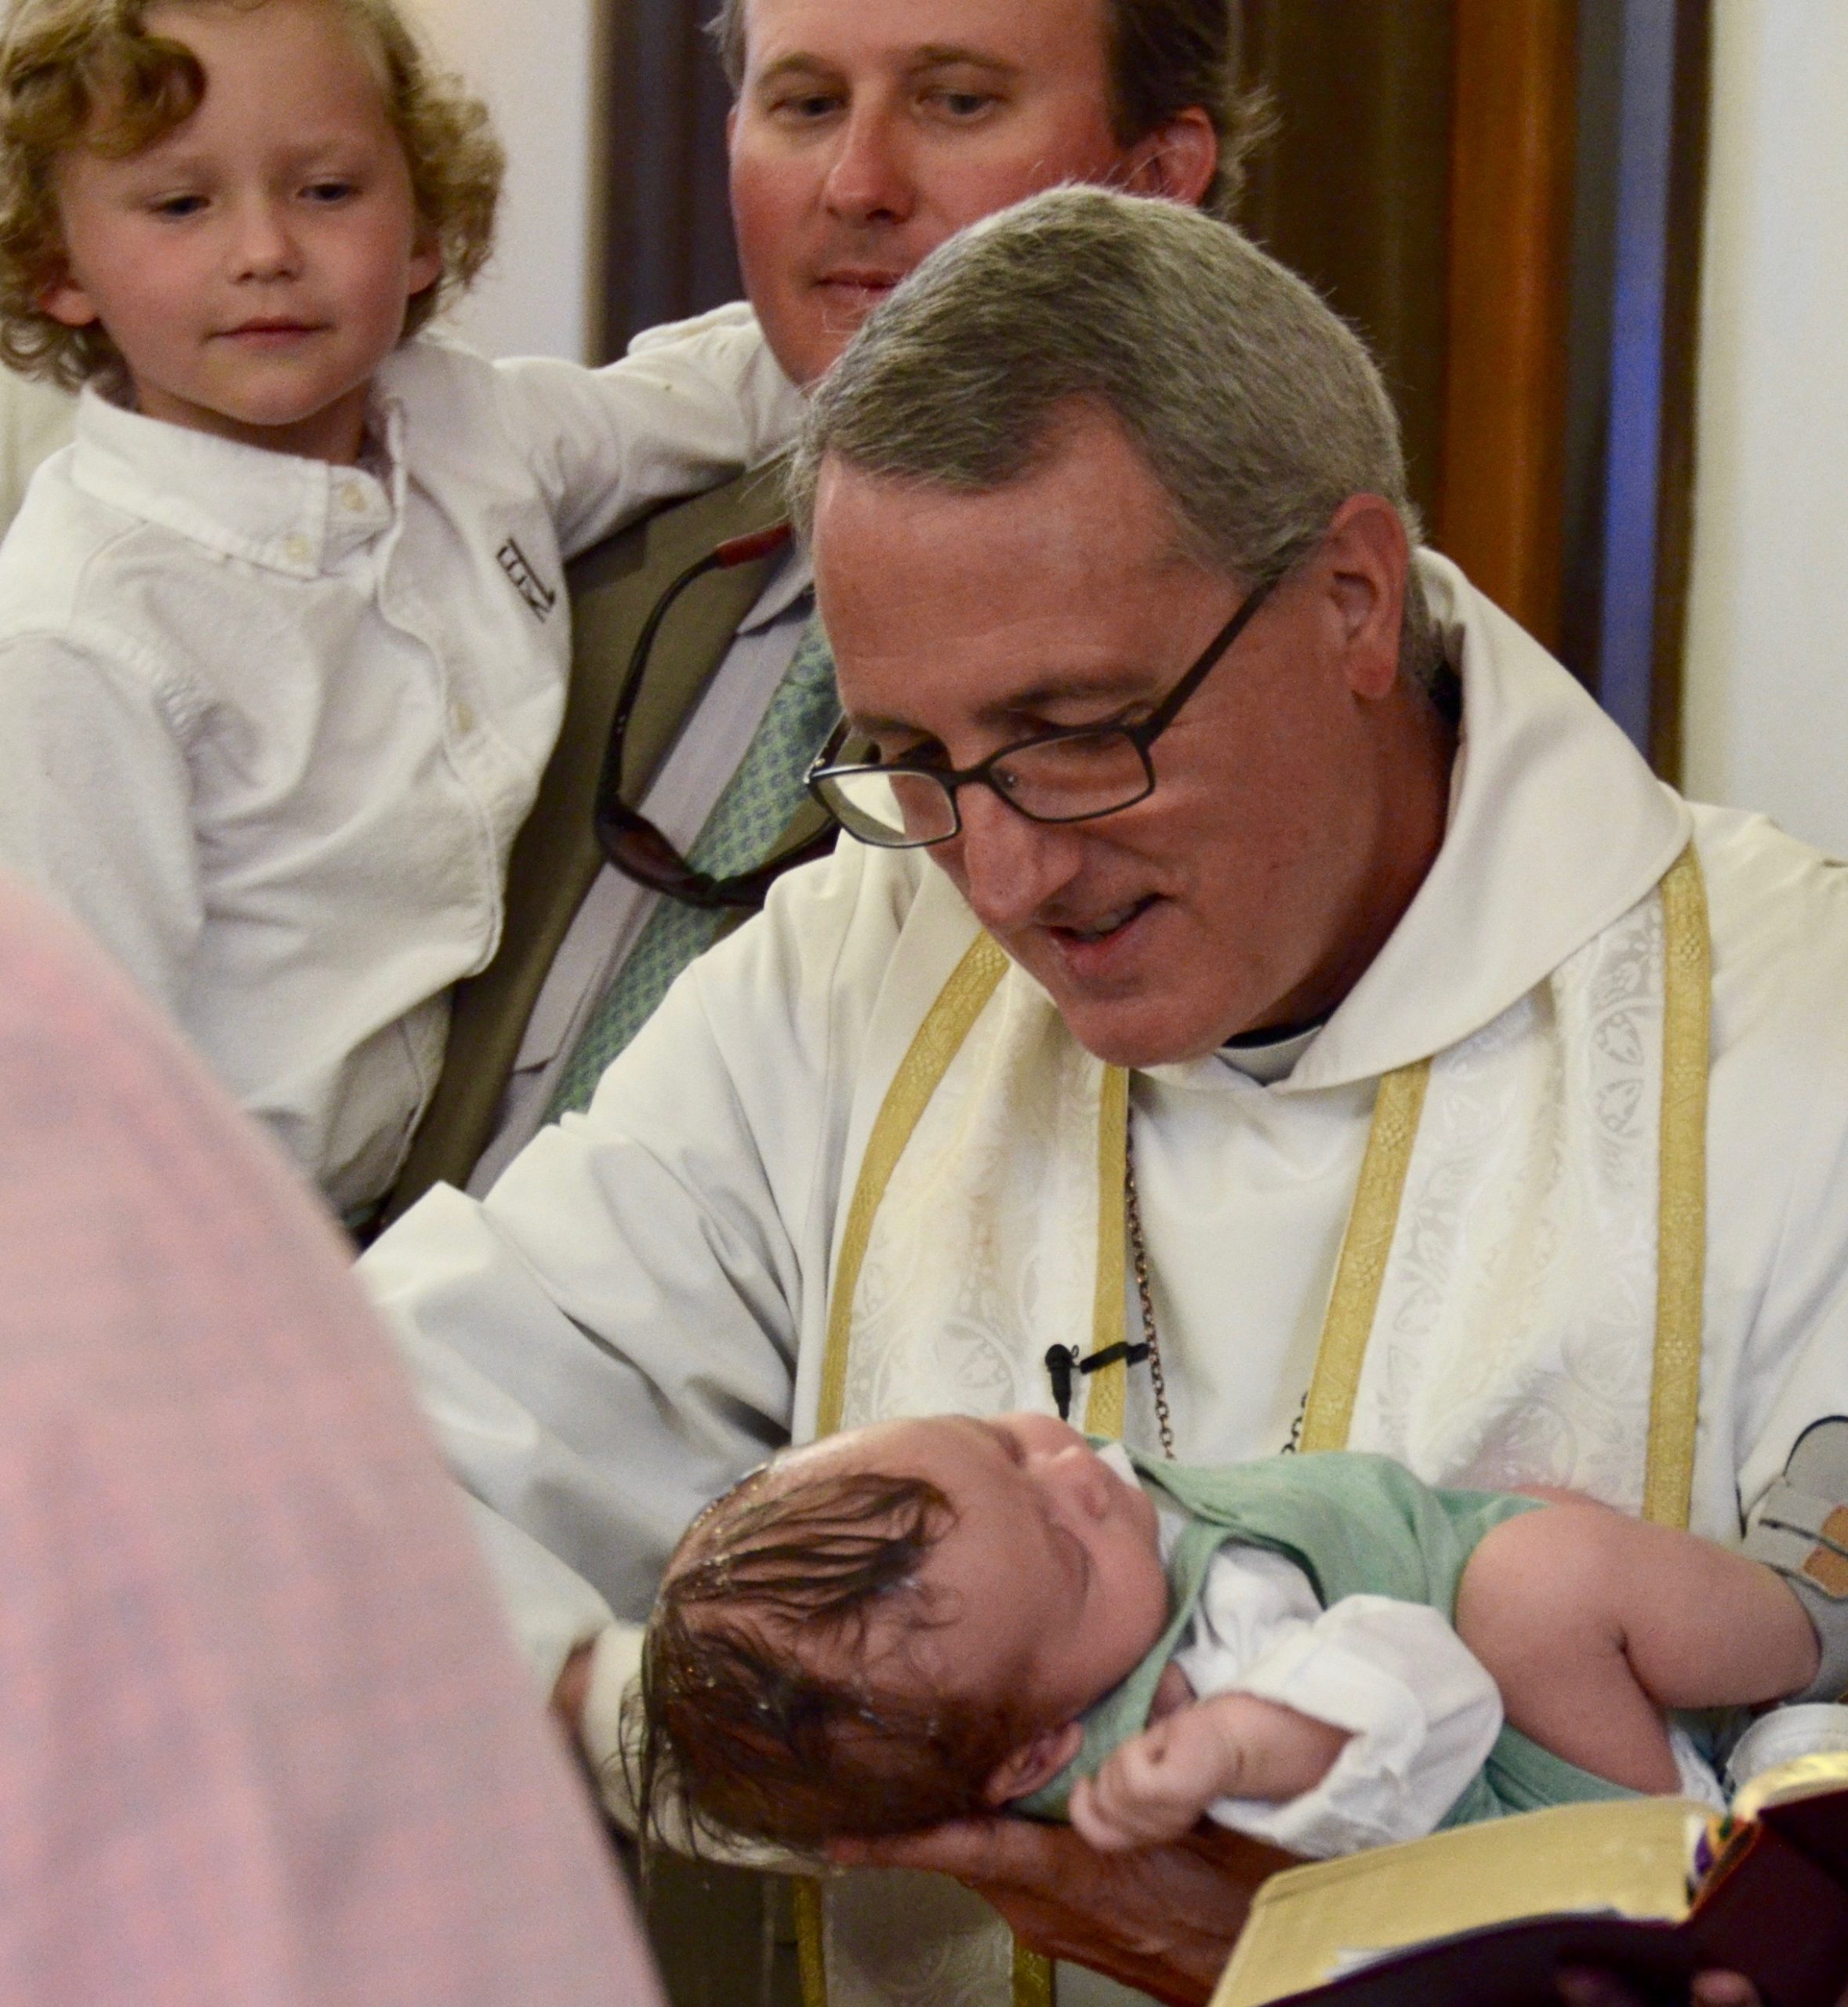 Baptising a baby